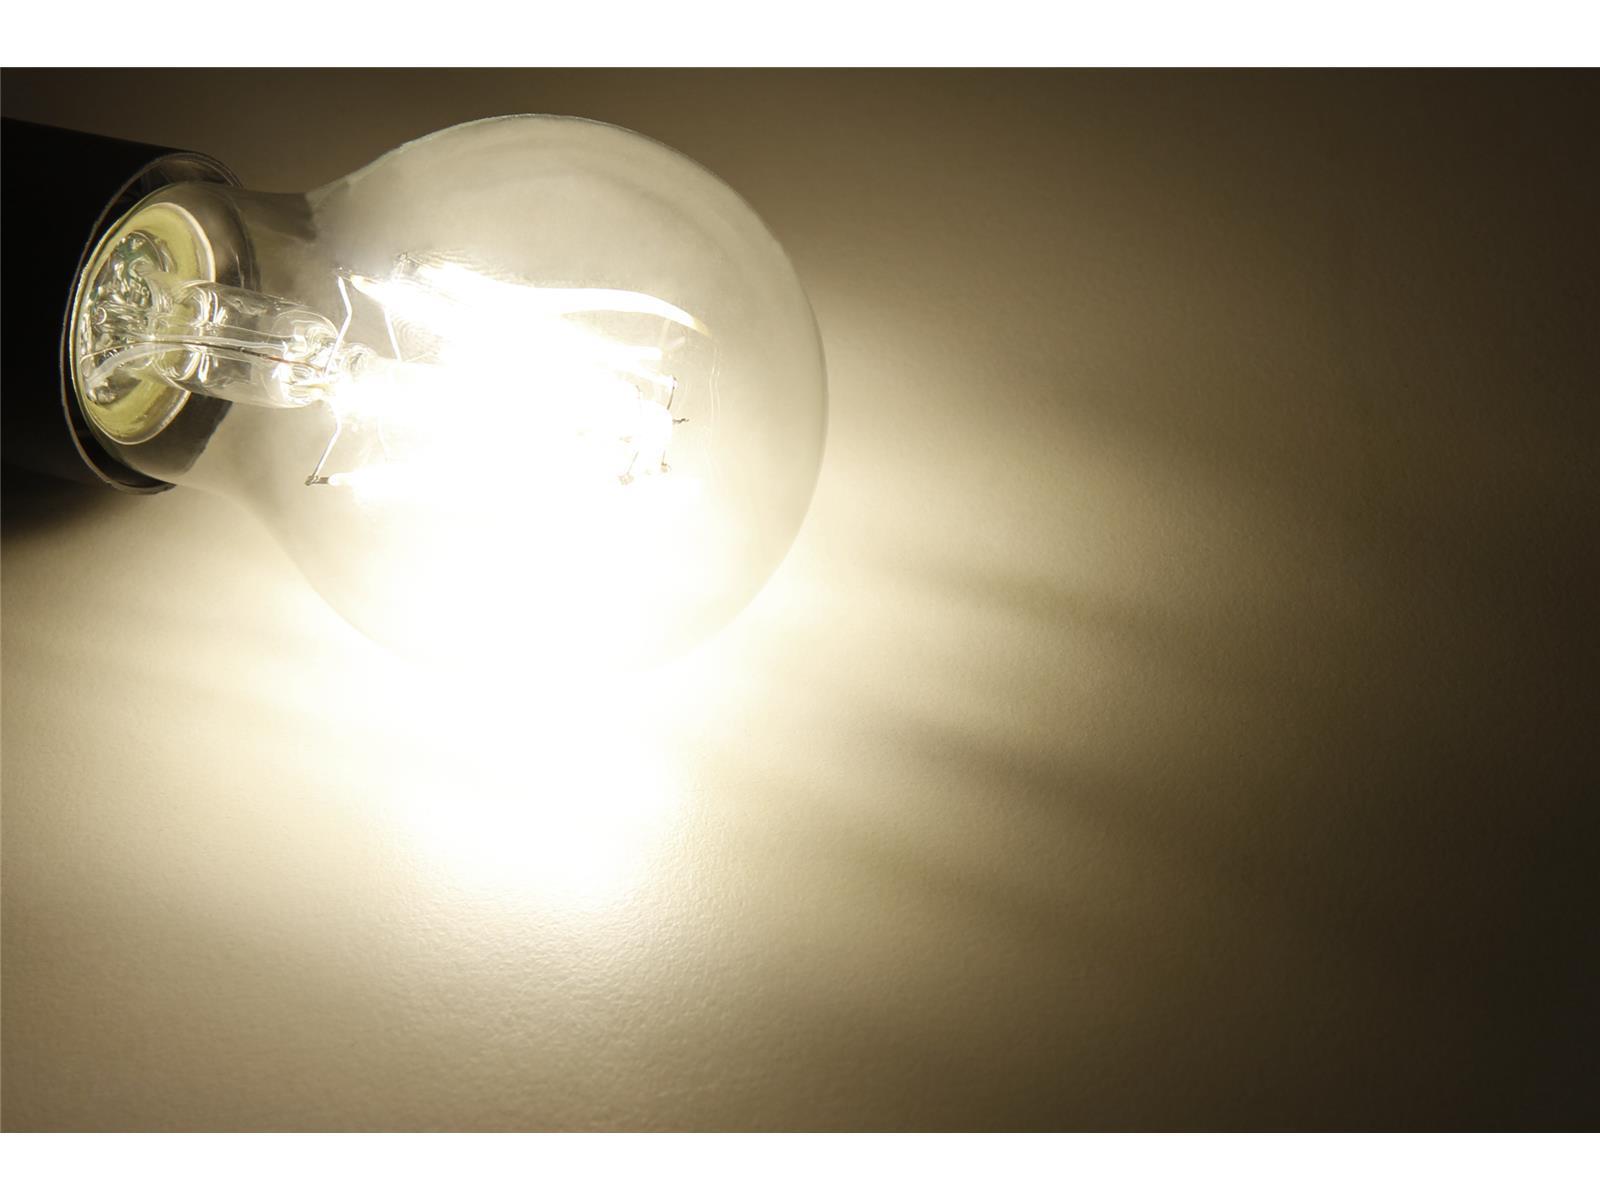 LED Filament Glühlampe McShine ''Filed'', E27, 7W, 820 lm, warmweiß, dimmbar, klar